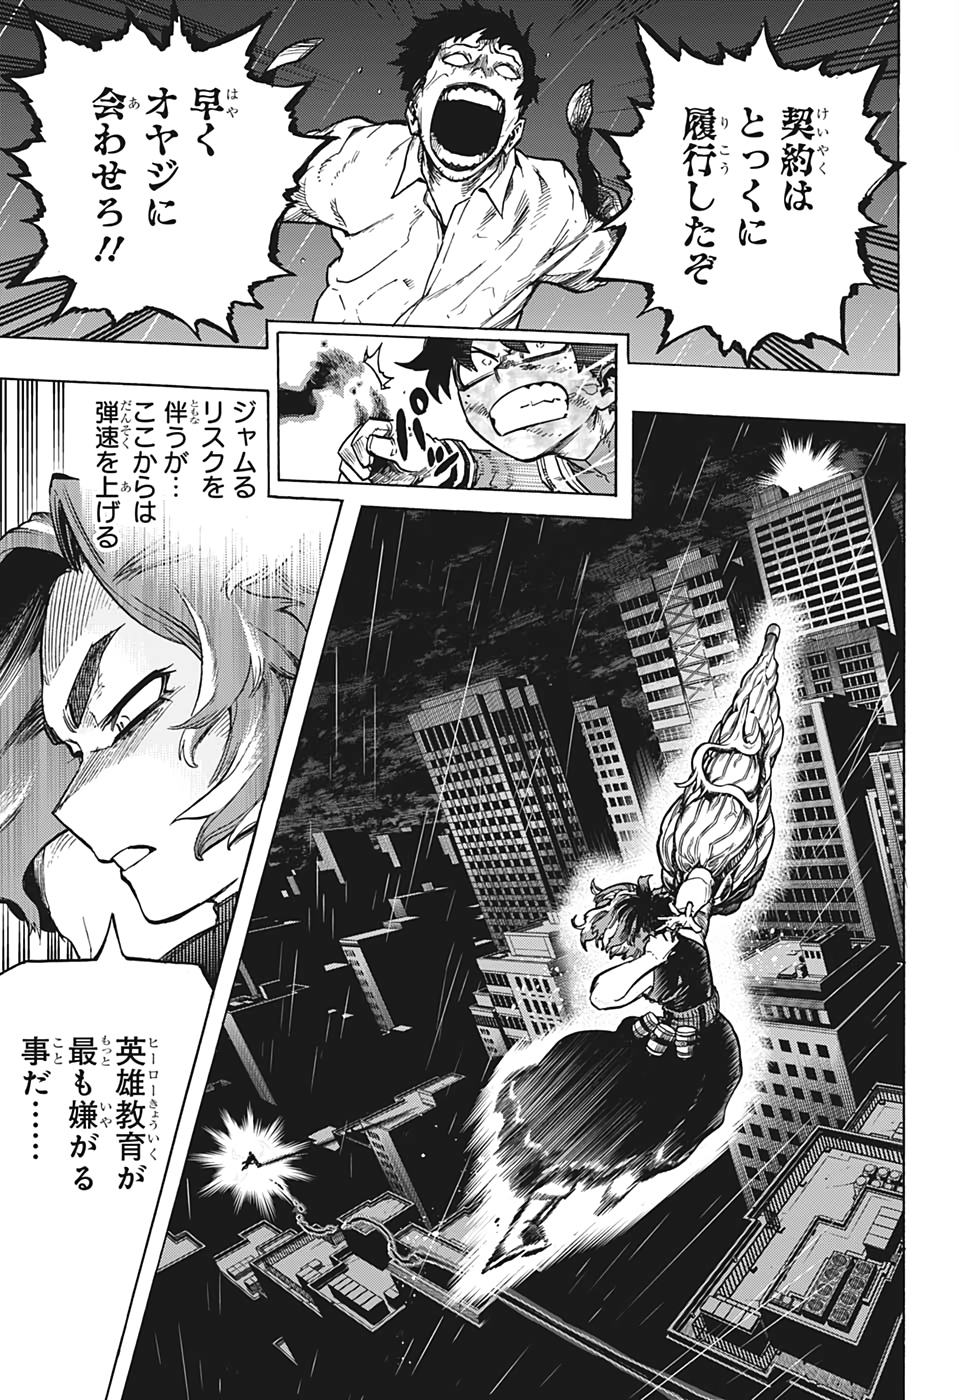 Boku no Hero Academia - Chapter 315 - Page 3